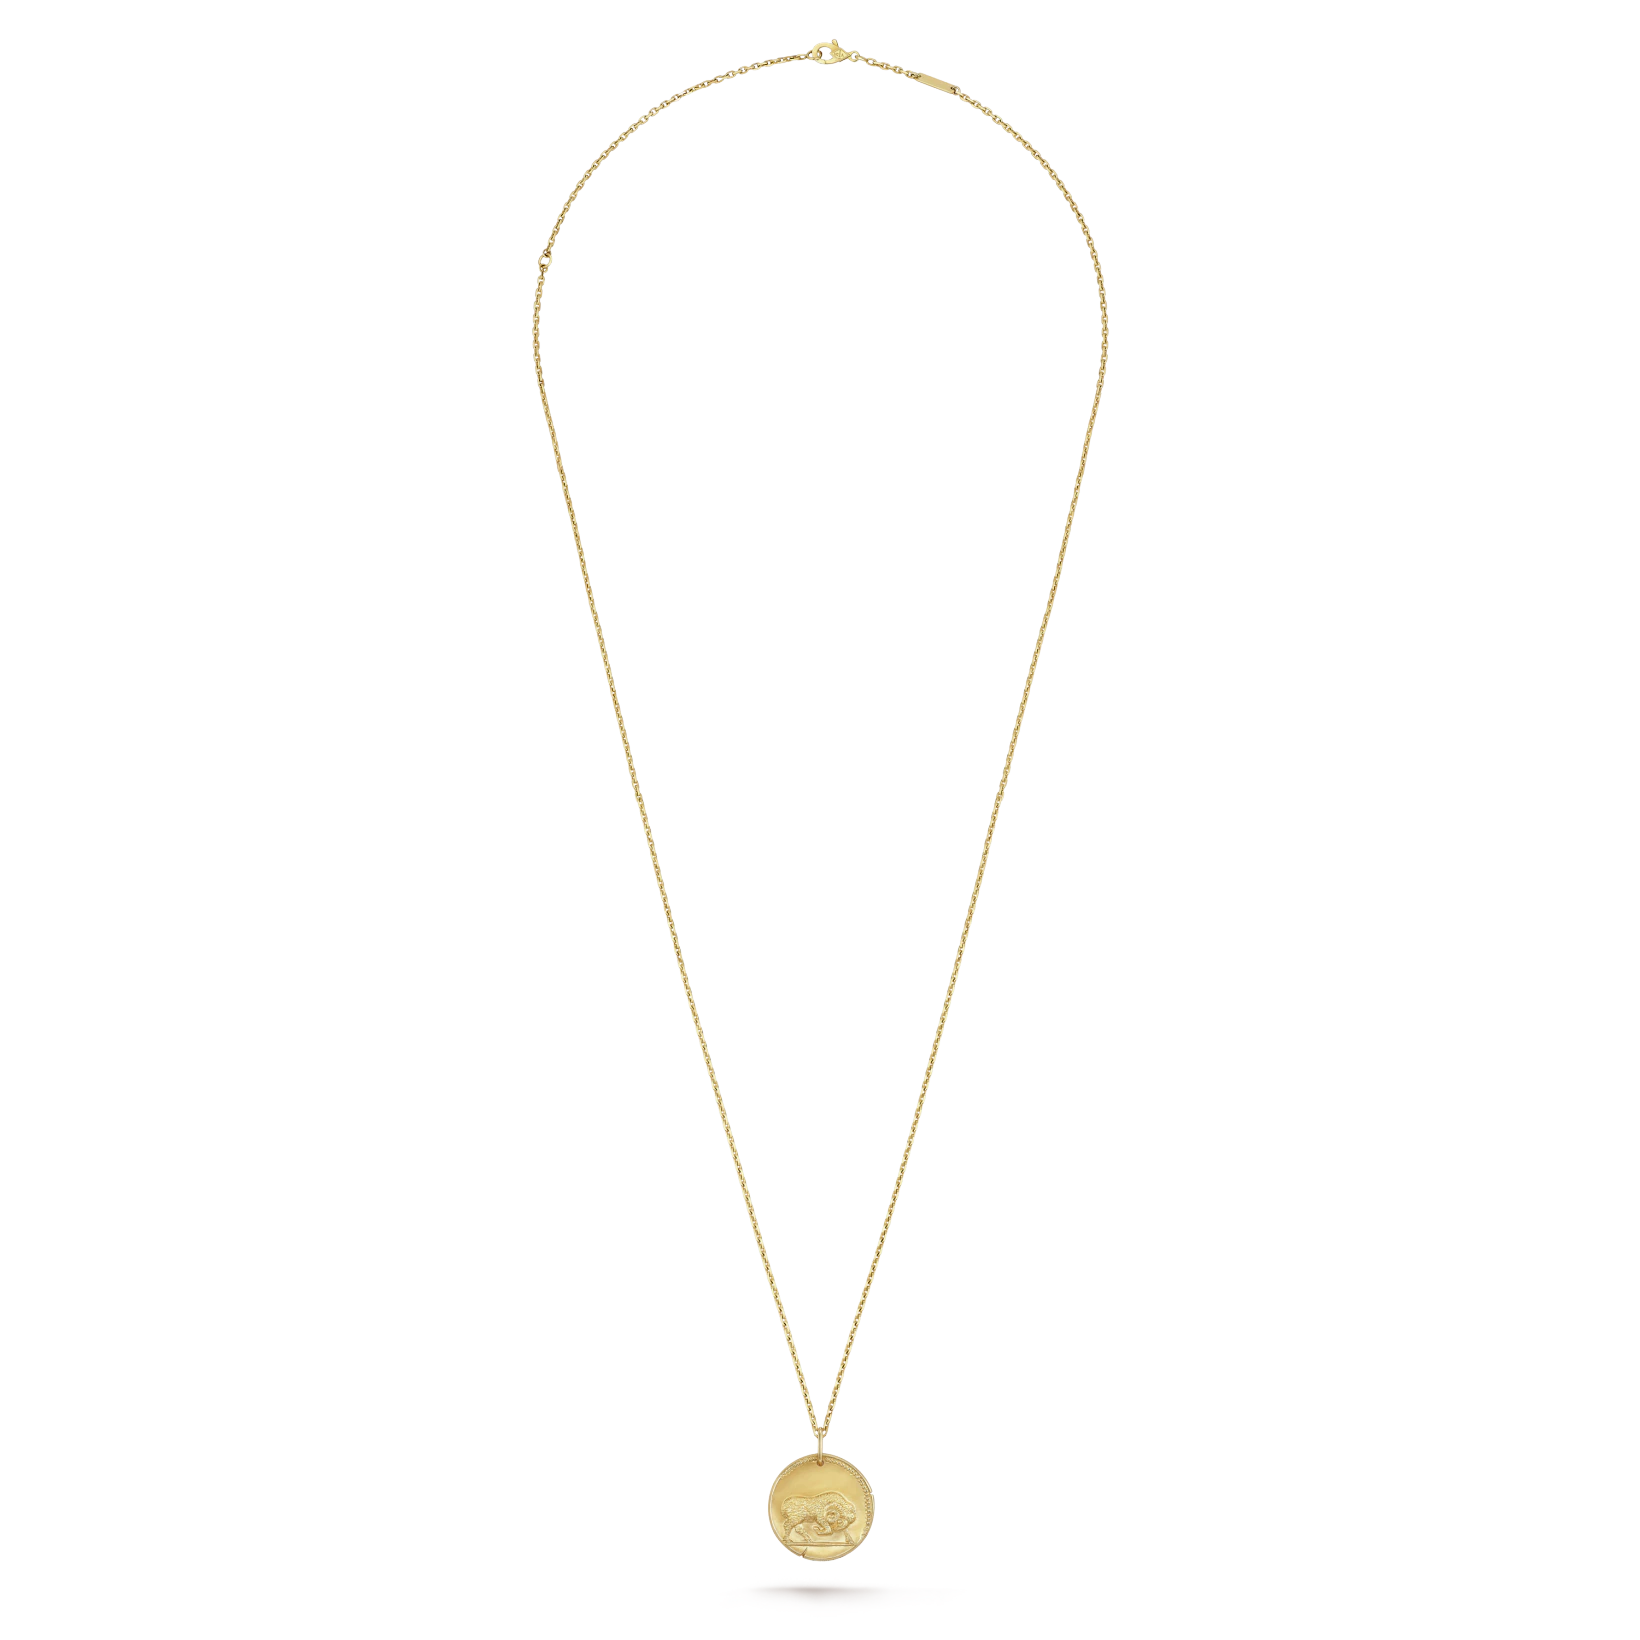 Zodiaque-medal-Arietis-Aries-4.webp